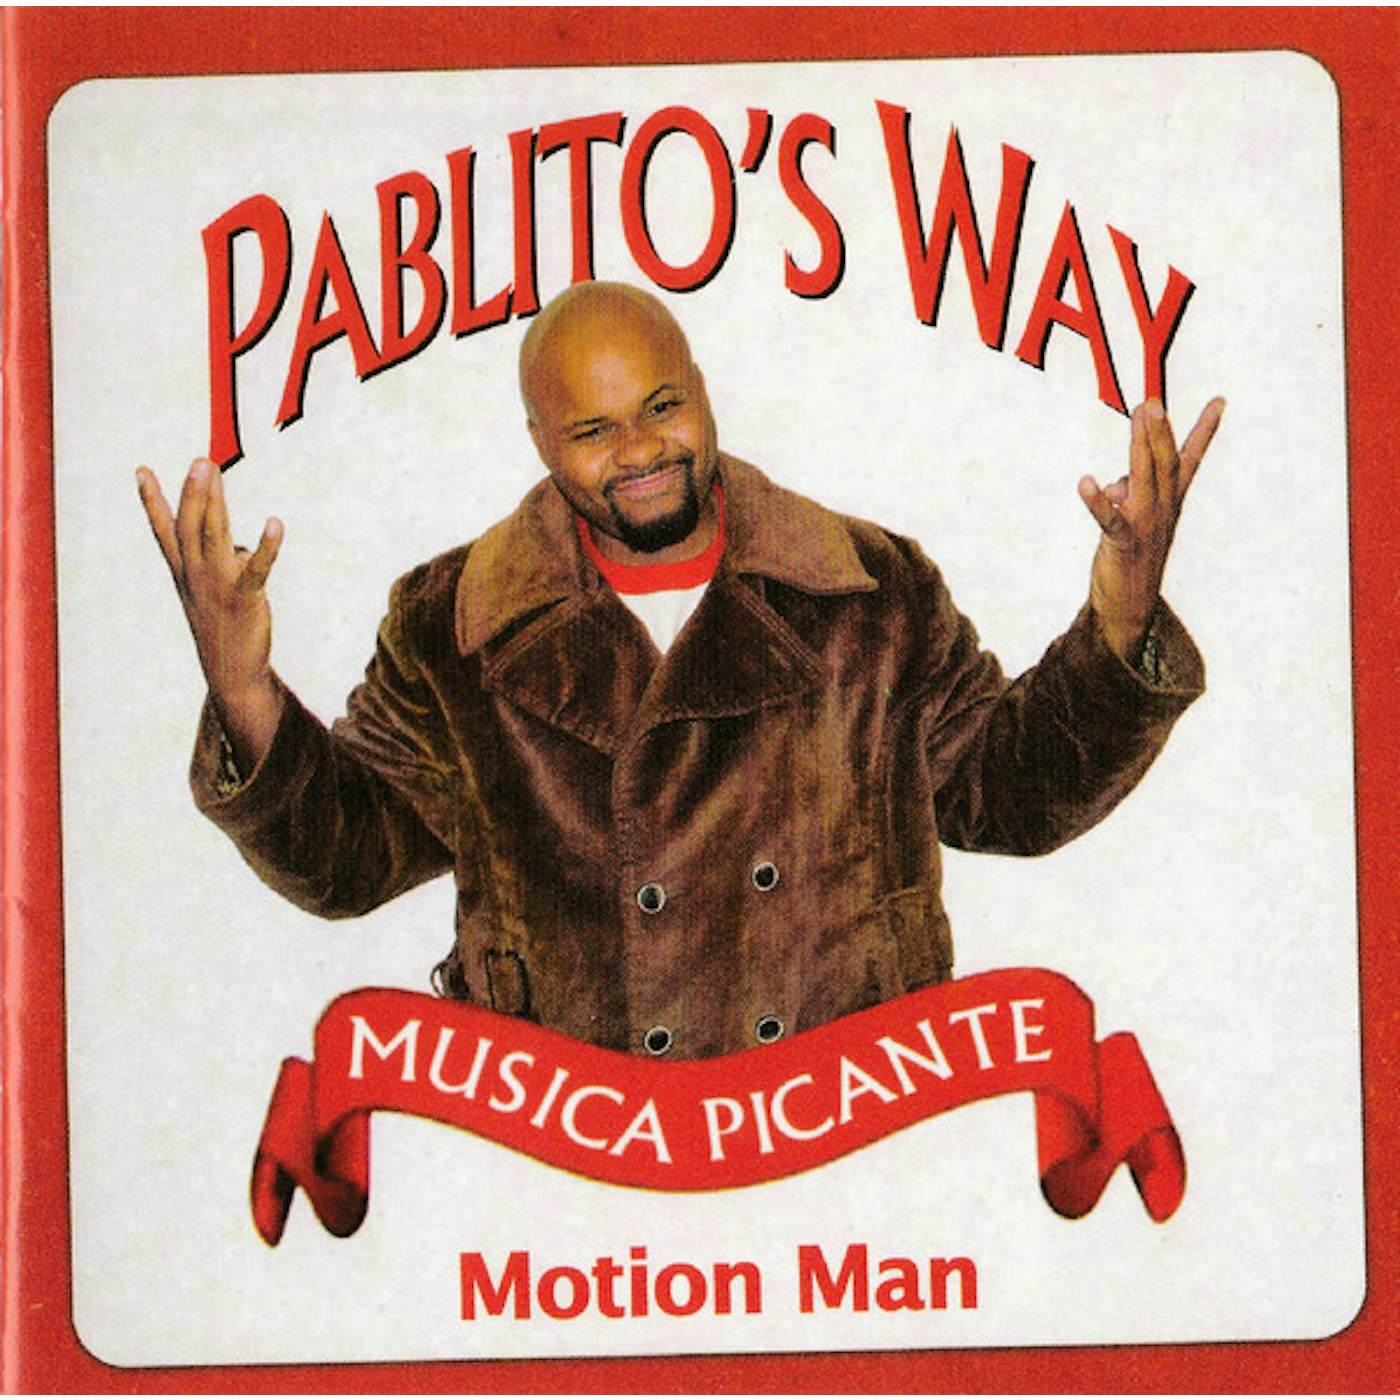 Motion Man PABLITOS WAY Vinyl Record